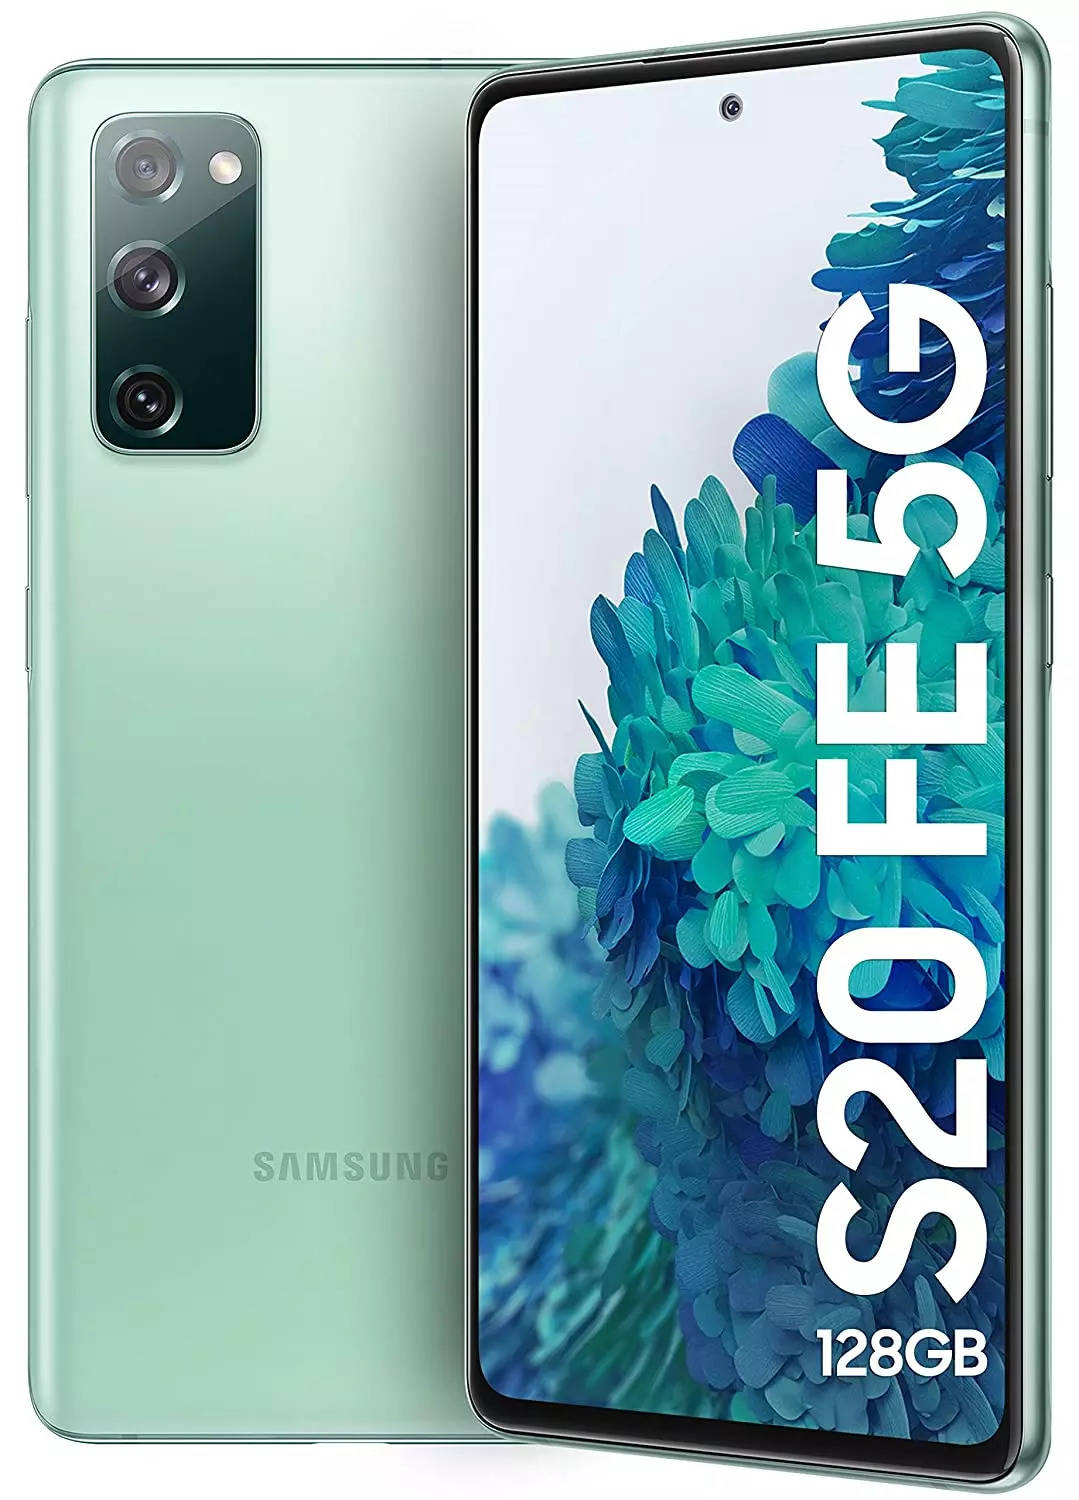 Samsung Galaxy S20 FE 5G review: Future-ready premium phone